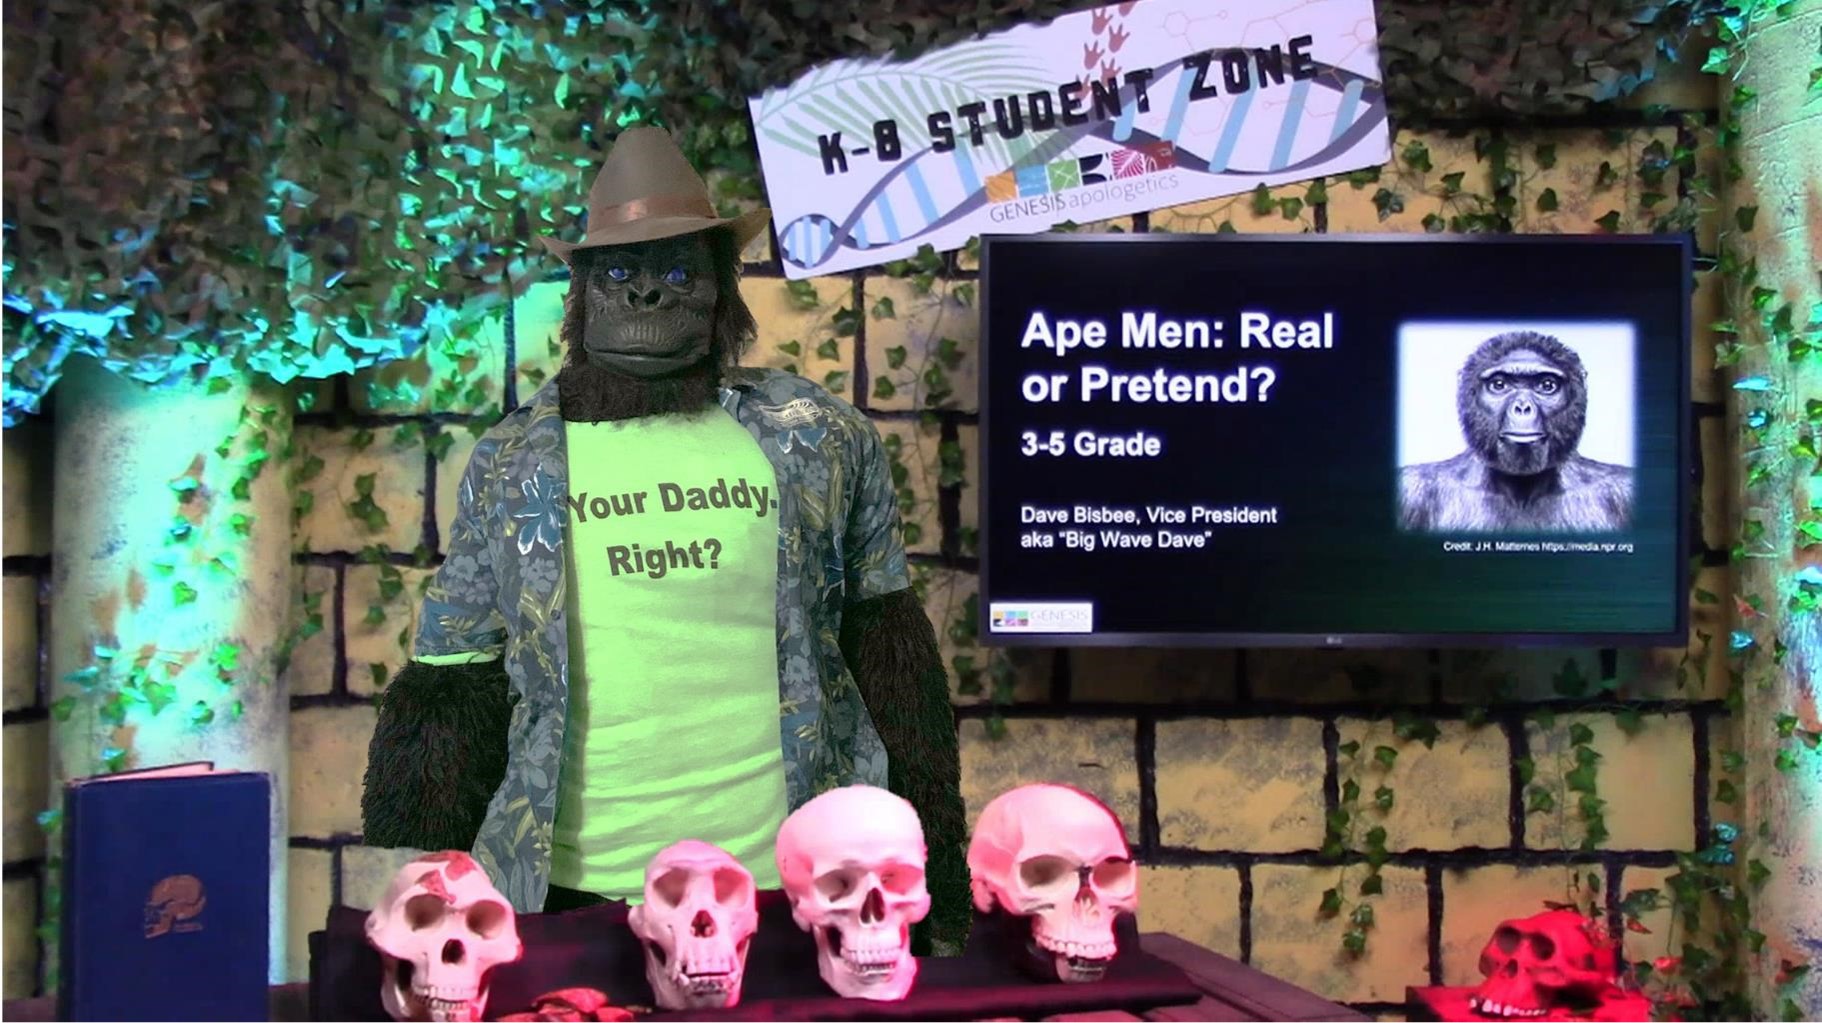 Ape Men: Real or Pretend?